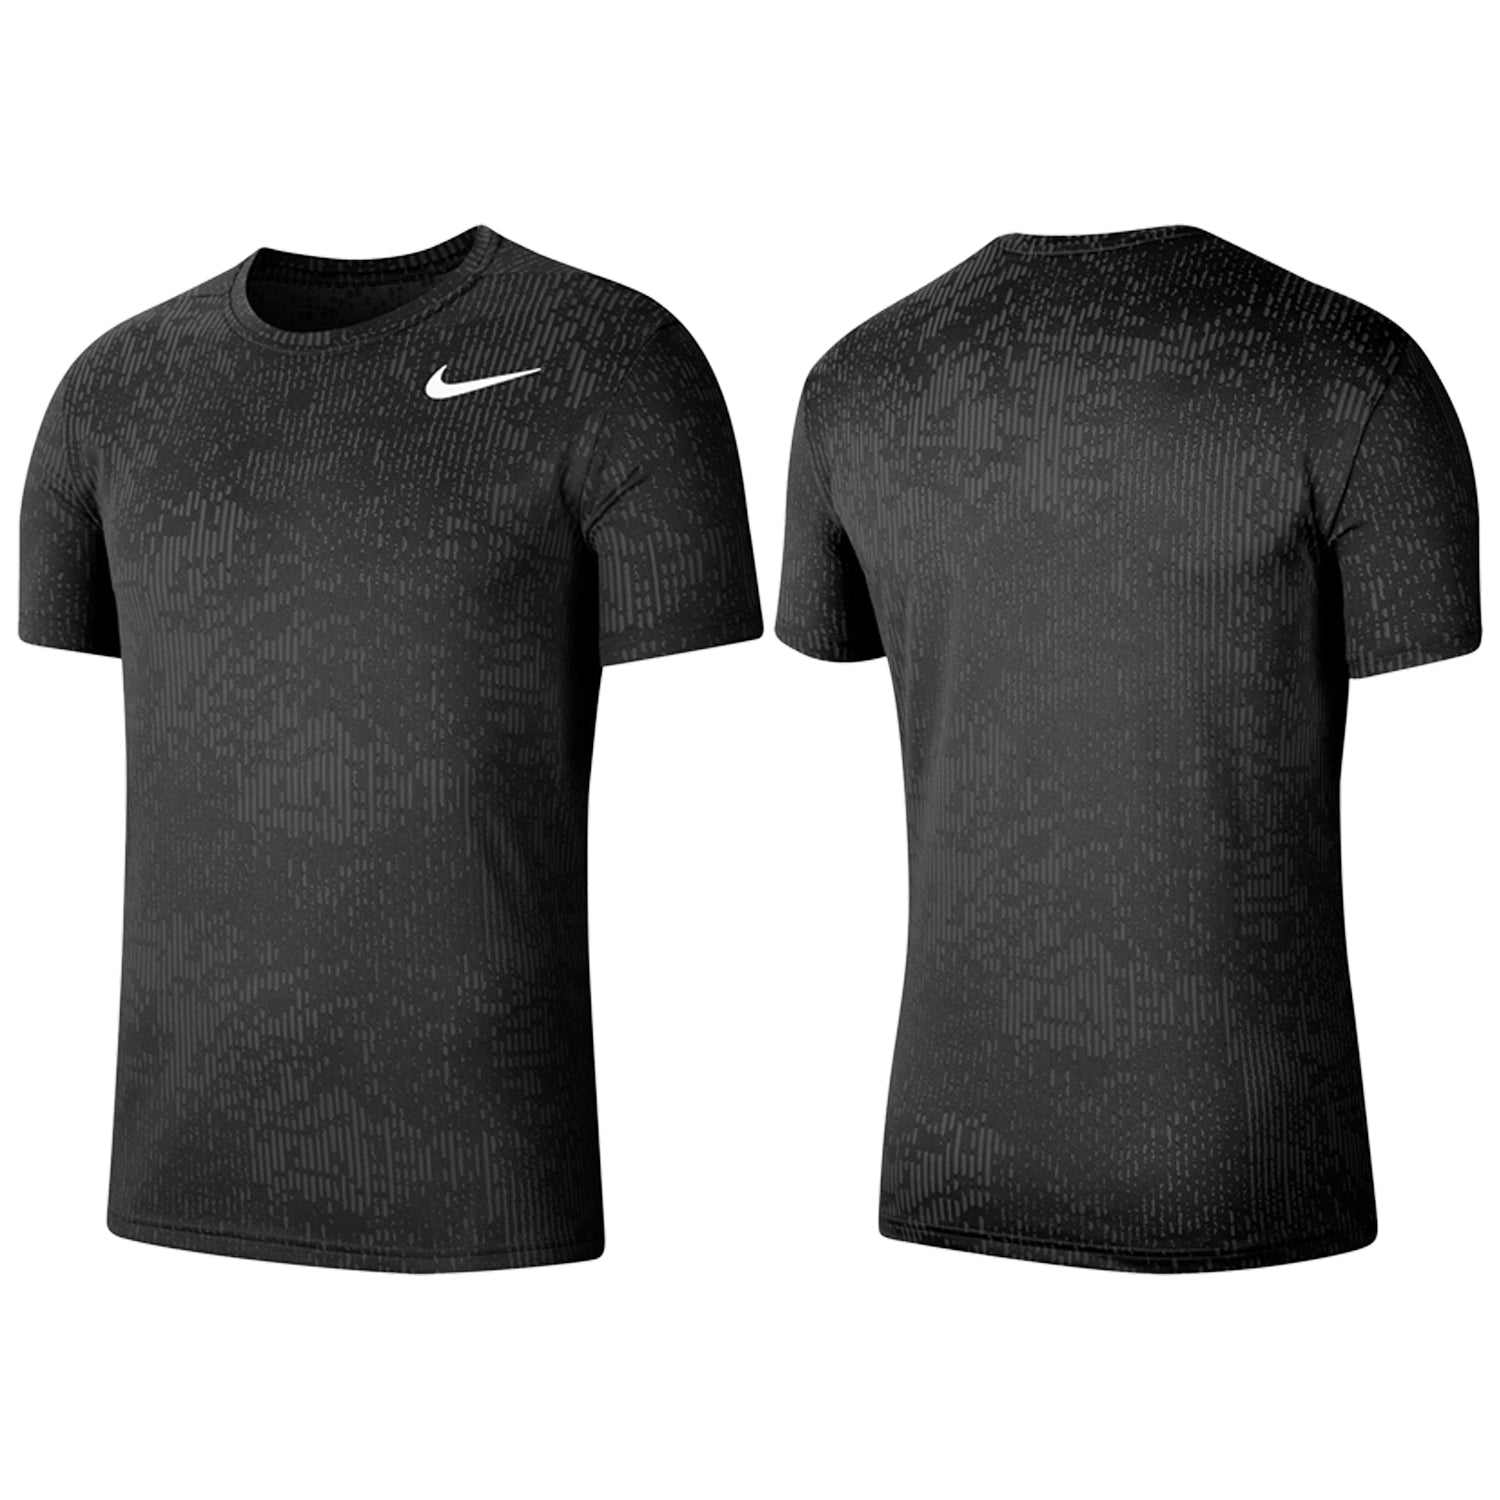 Nike Superset Short Sleeve Performance Top Mens Style : Cj4635